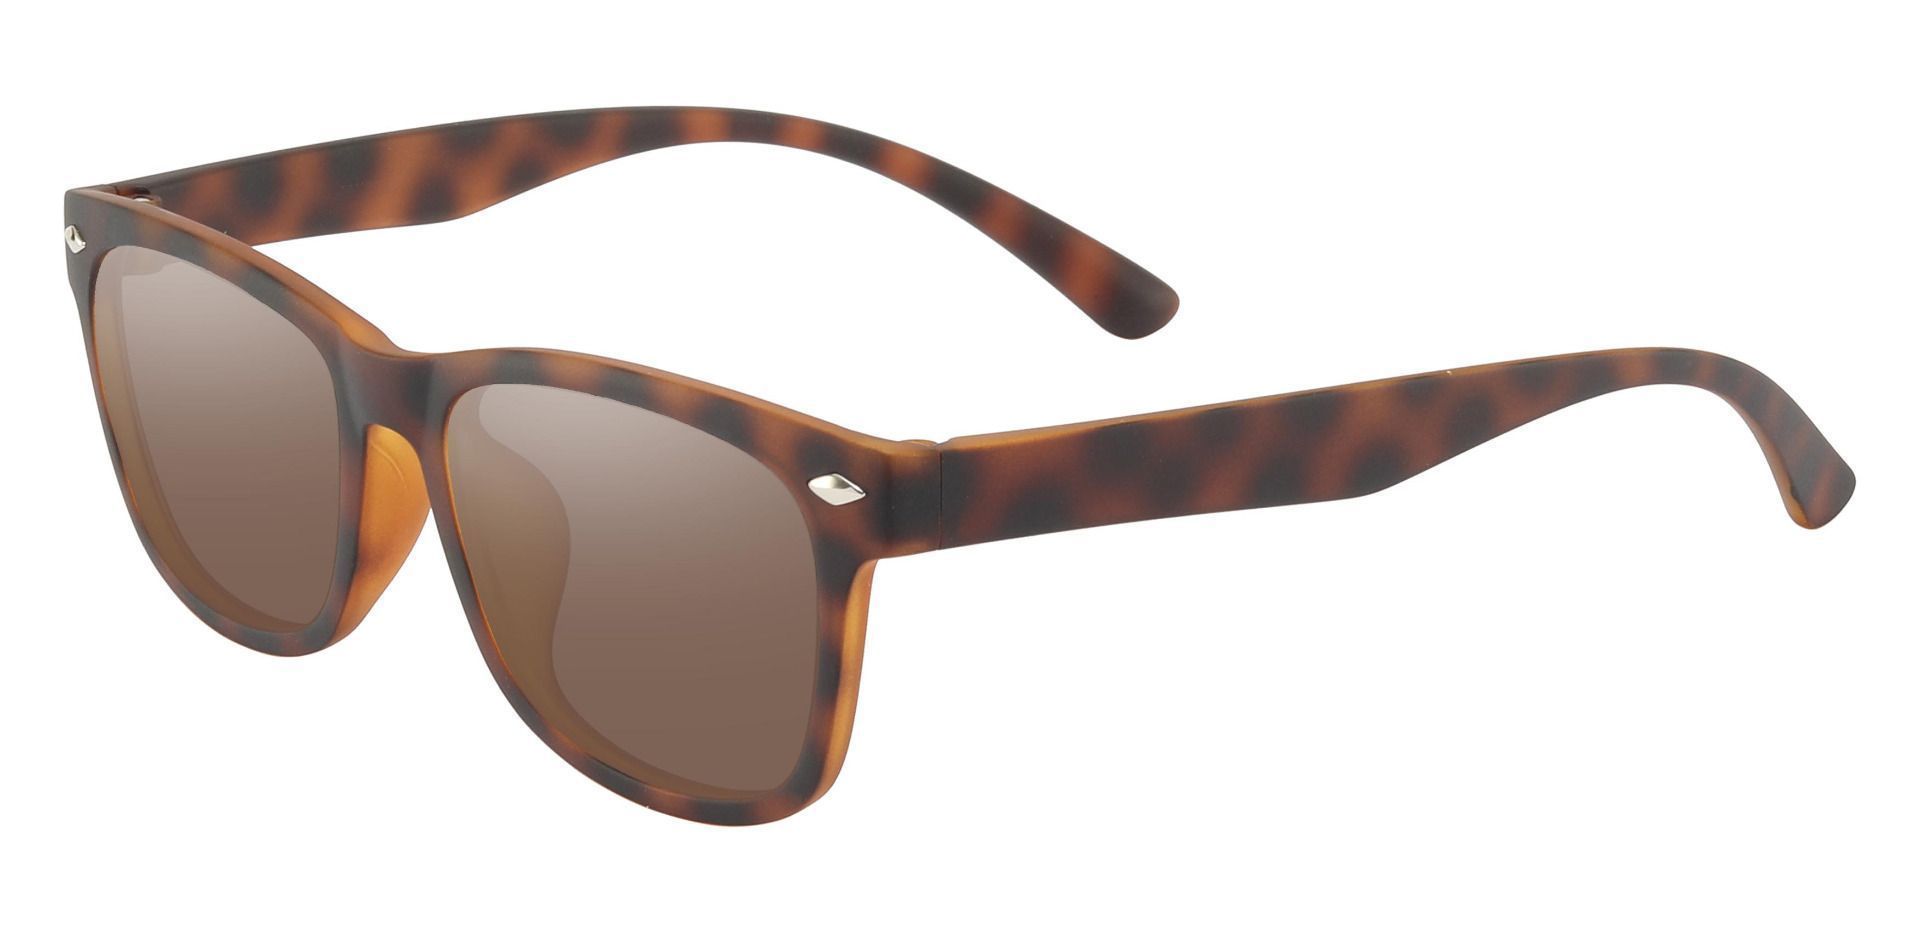 Shaler Square Lined Bifocal Sunglasses - Tortoise Frame With Brown Lenses